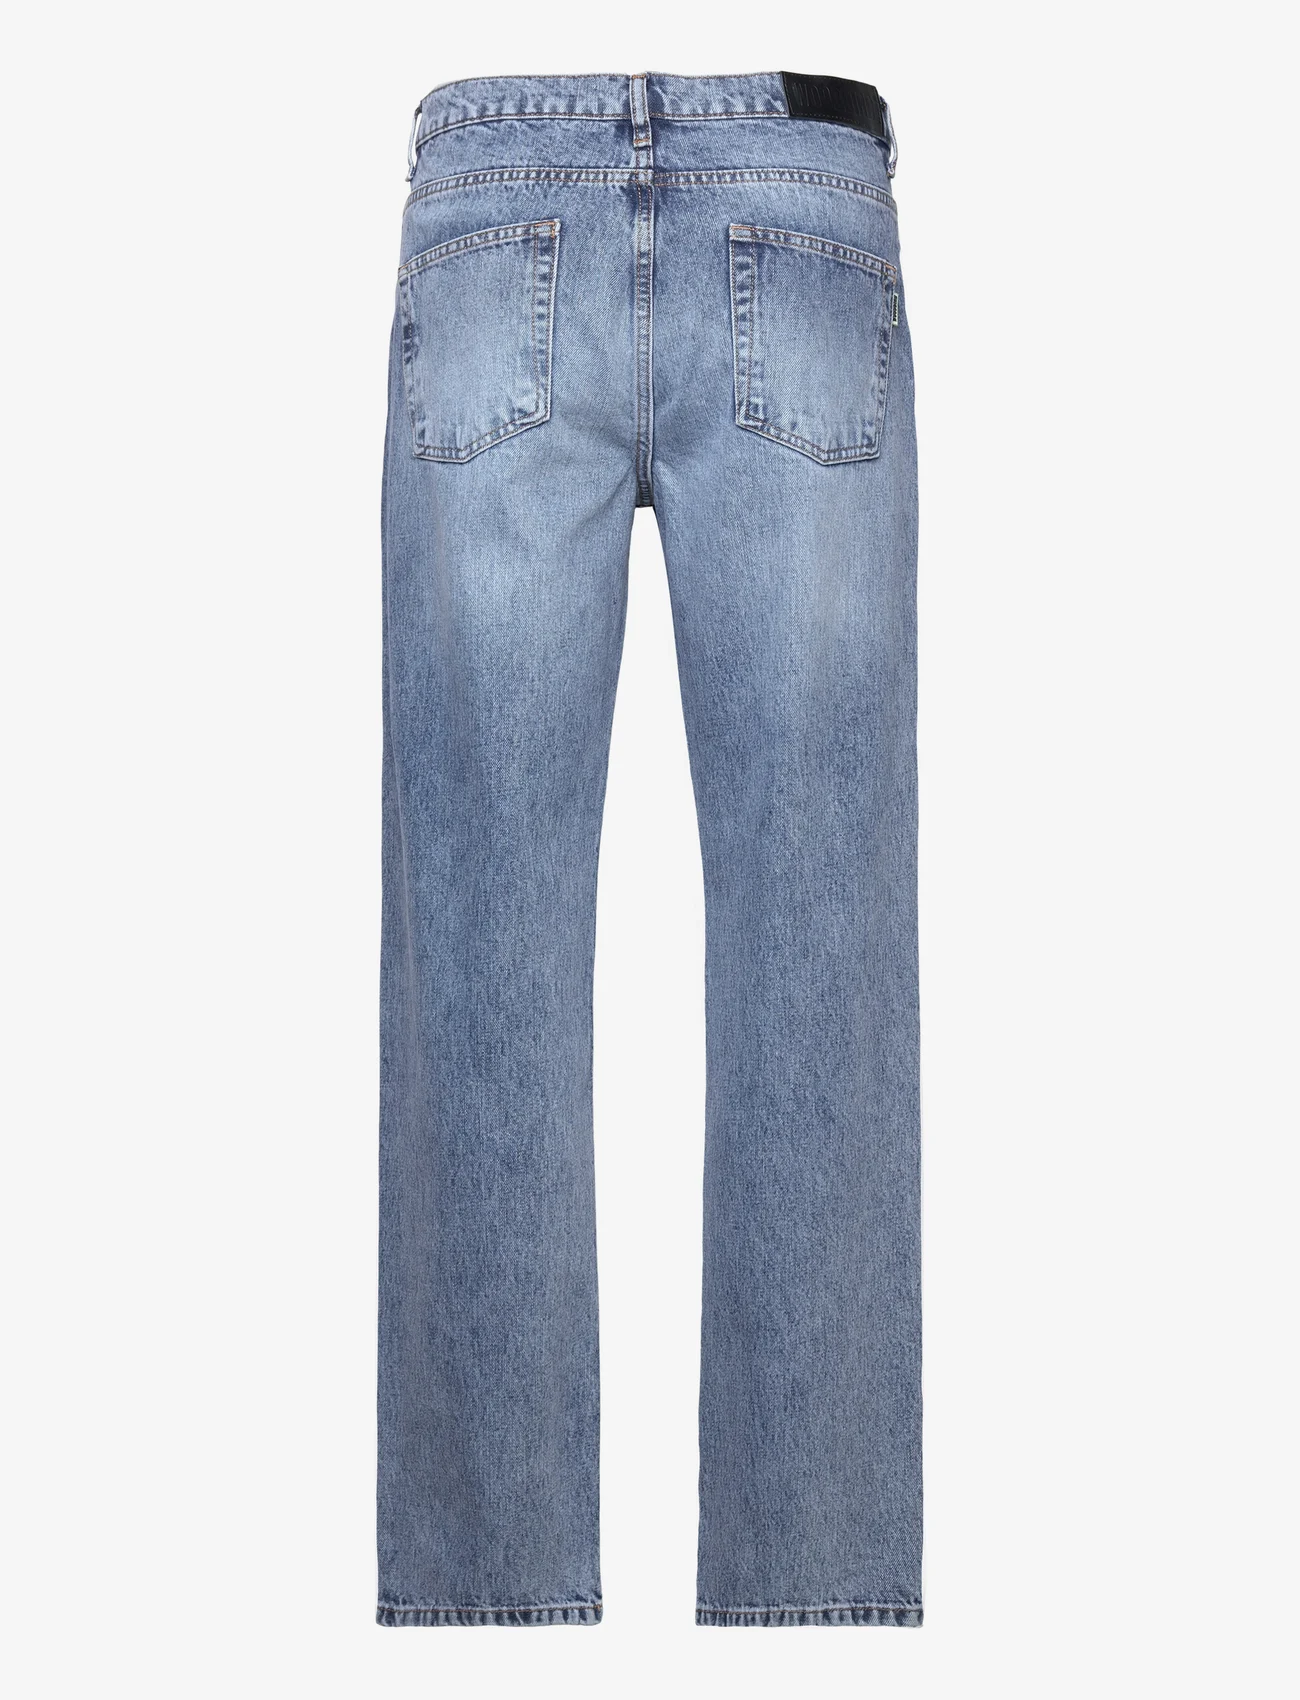 Woodbird - WBLeroy Marble Jeans - regular jeans - vintage blue - 1